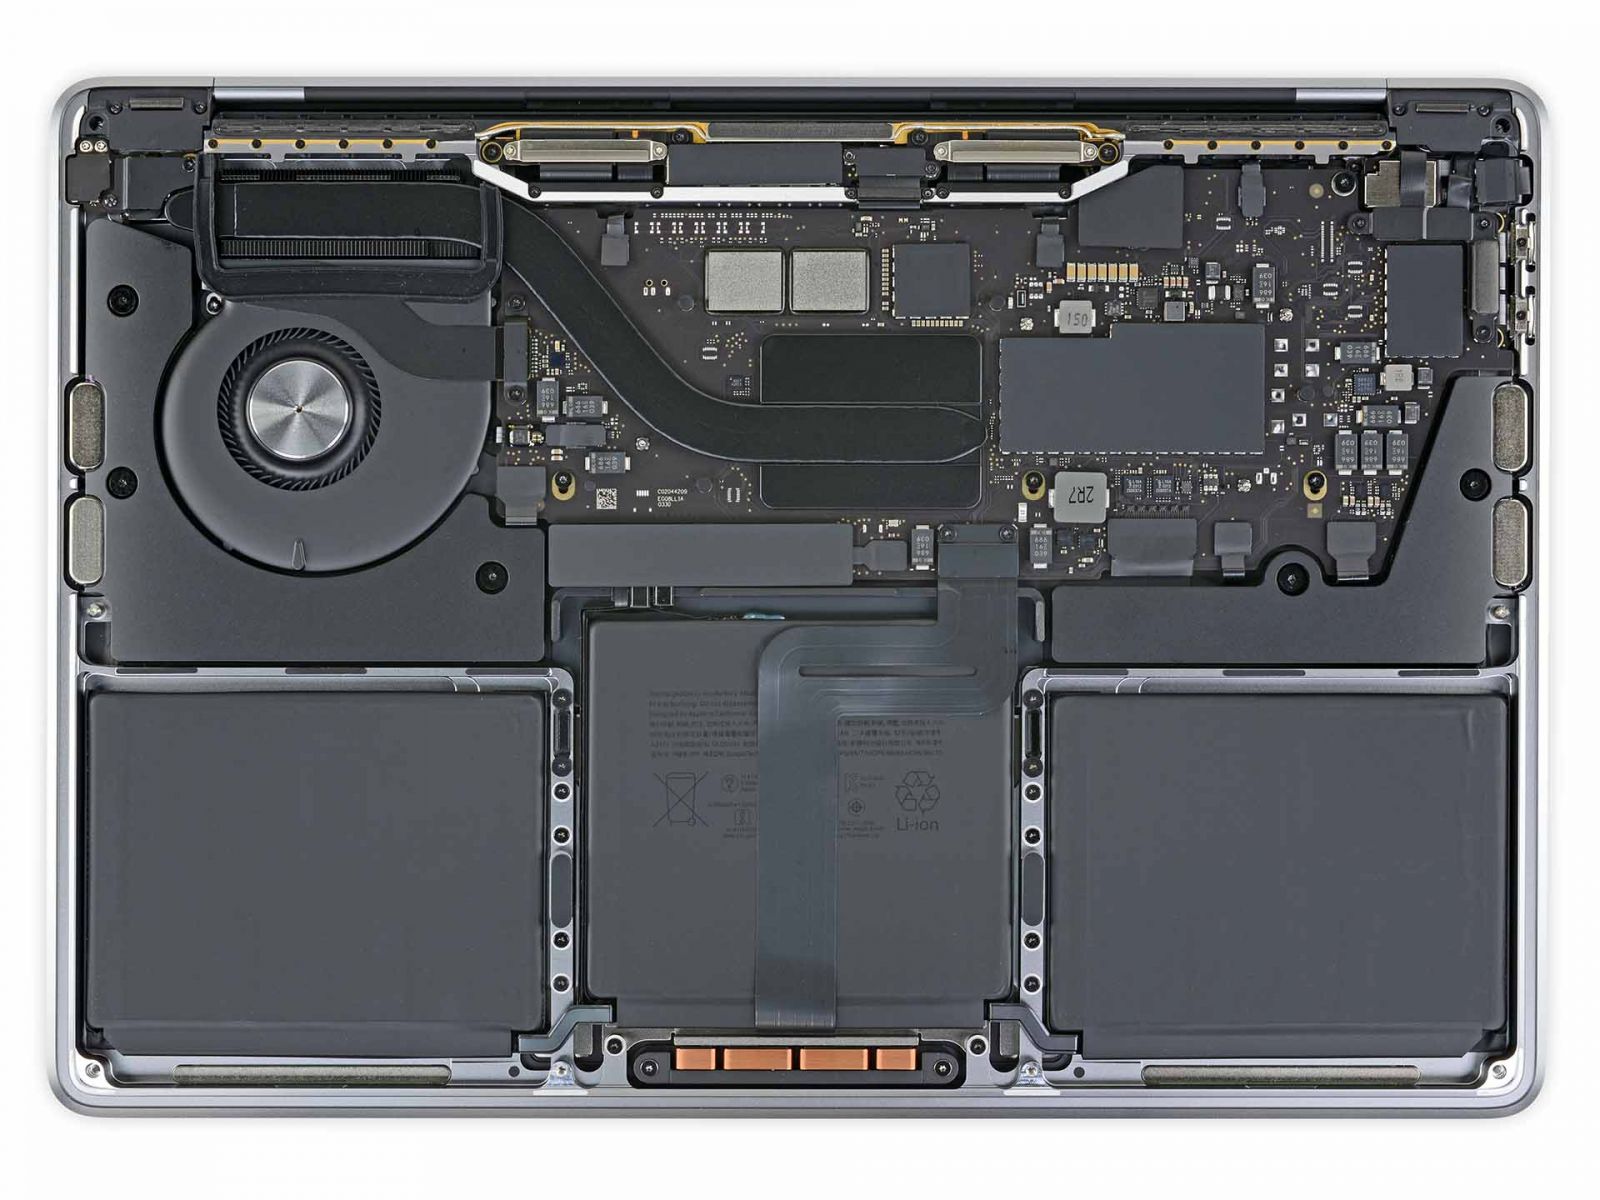 M1-MacBook-Pro-first-look-inside.jpg